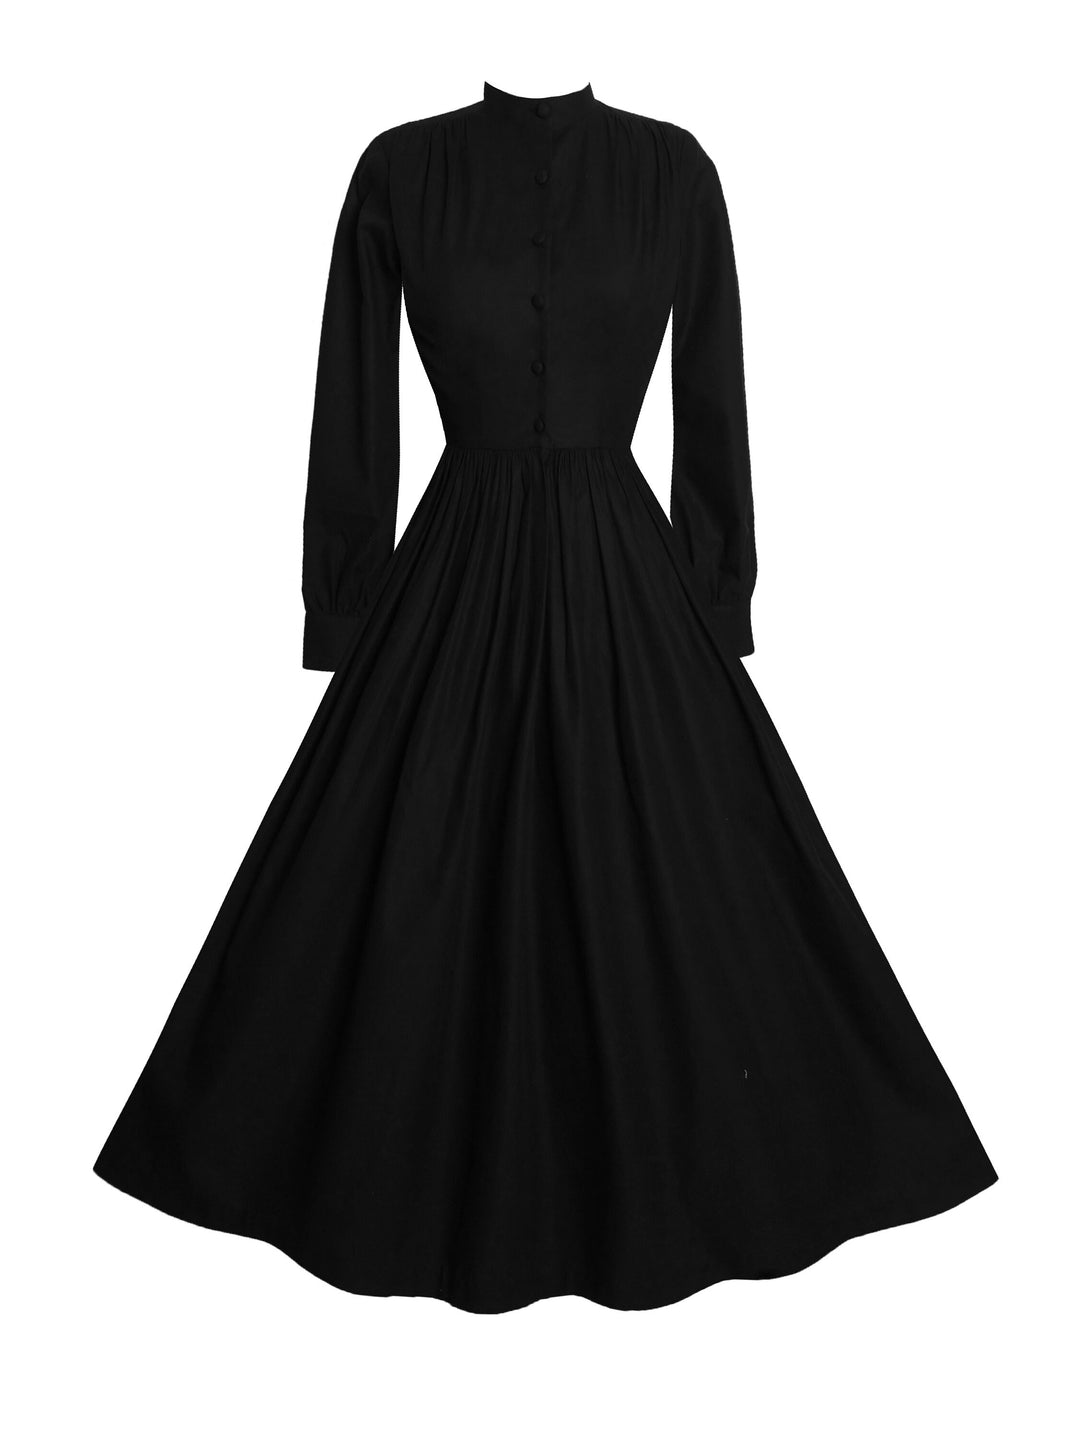 RTS - Size S - Eileen Dress in Raven Black Cotton